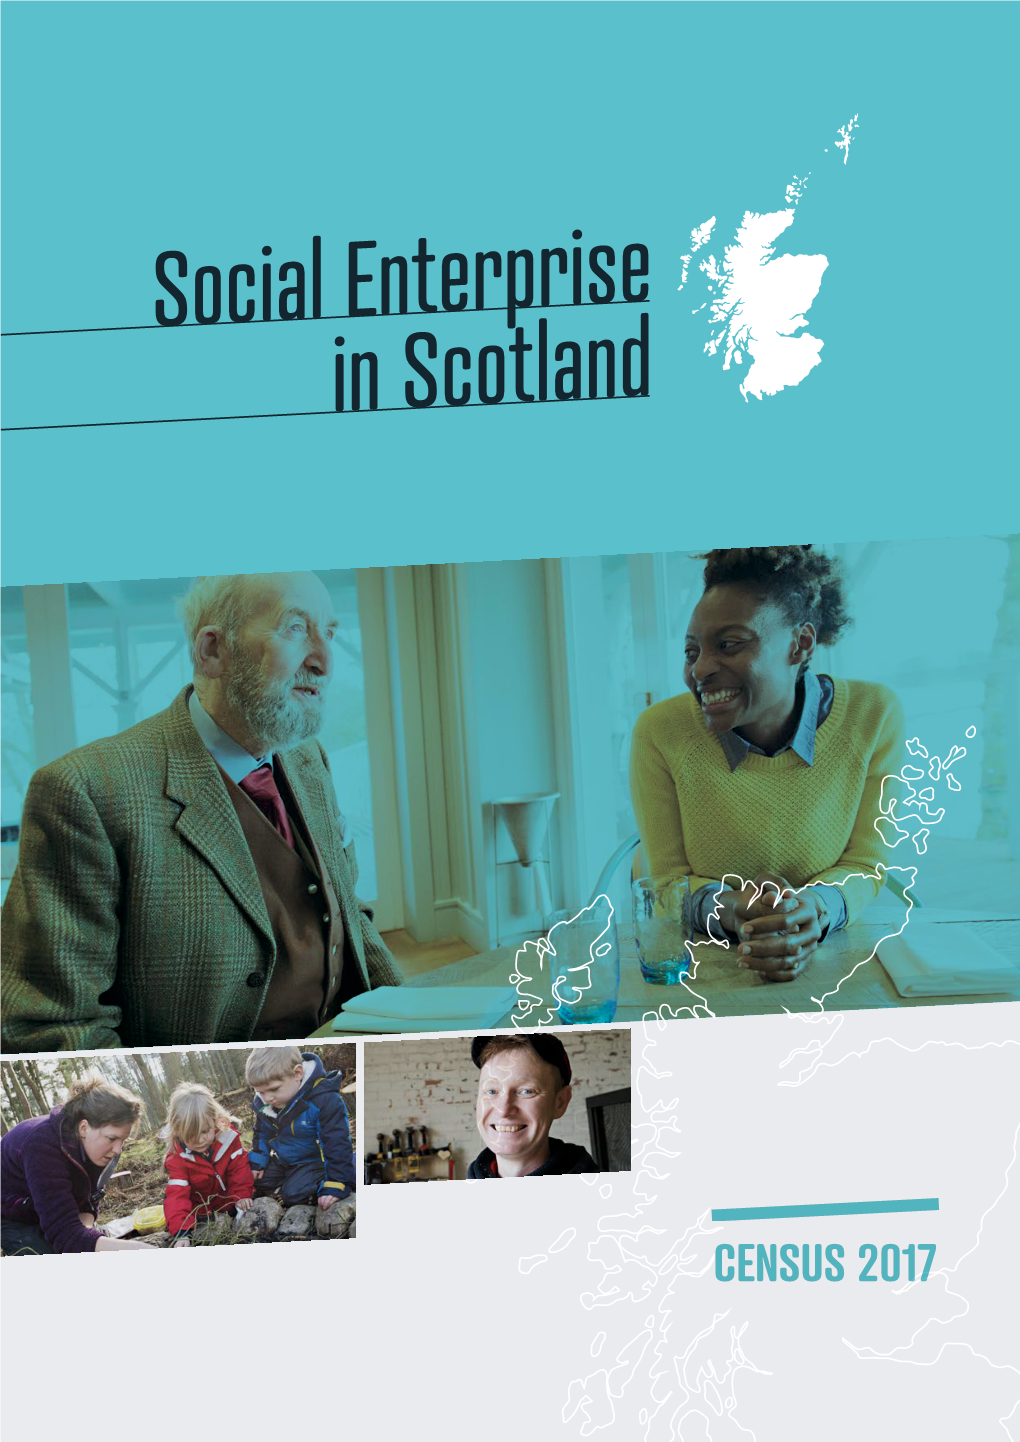 Social Enterprise in Scotland Census 2017